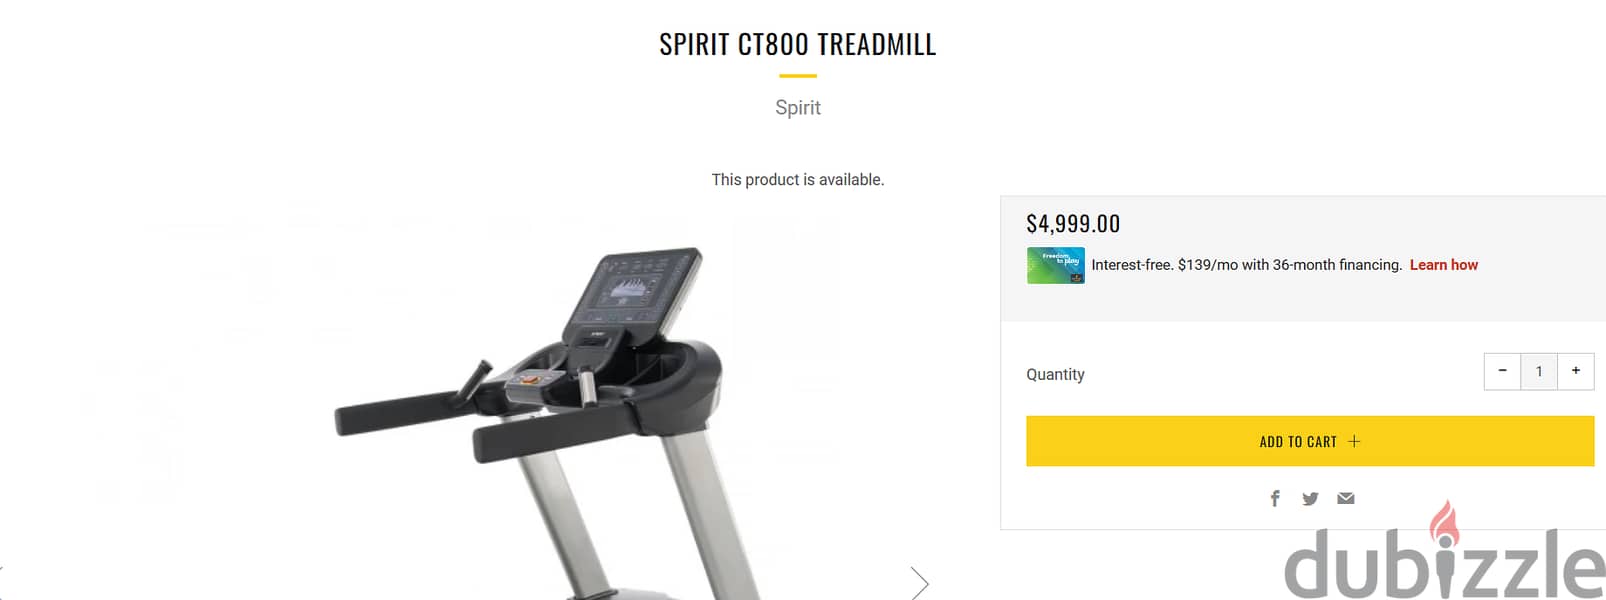 spirit ct800 treadmill 1